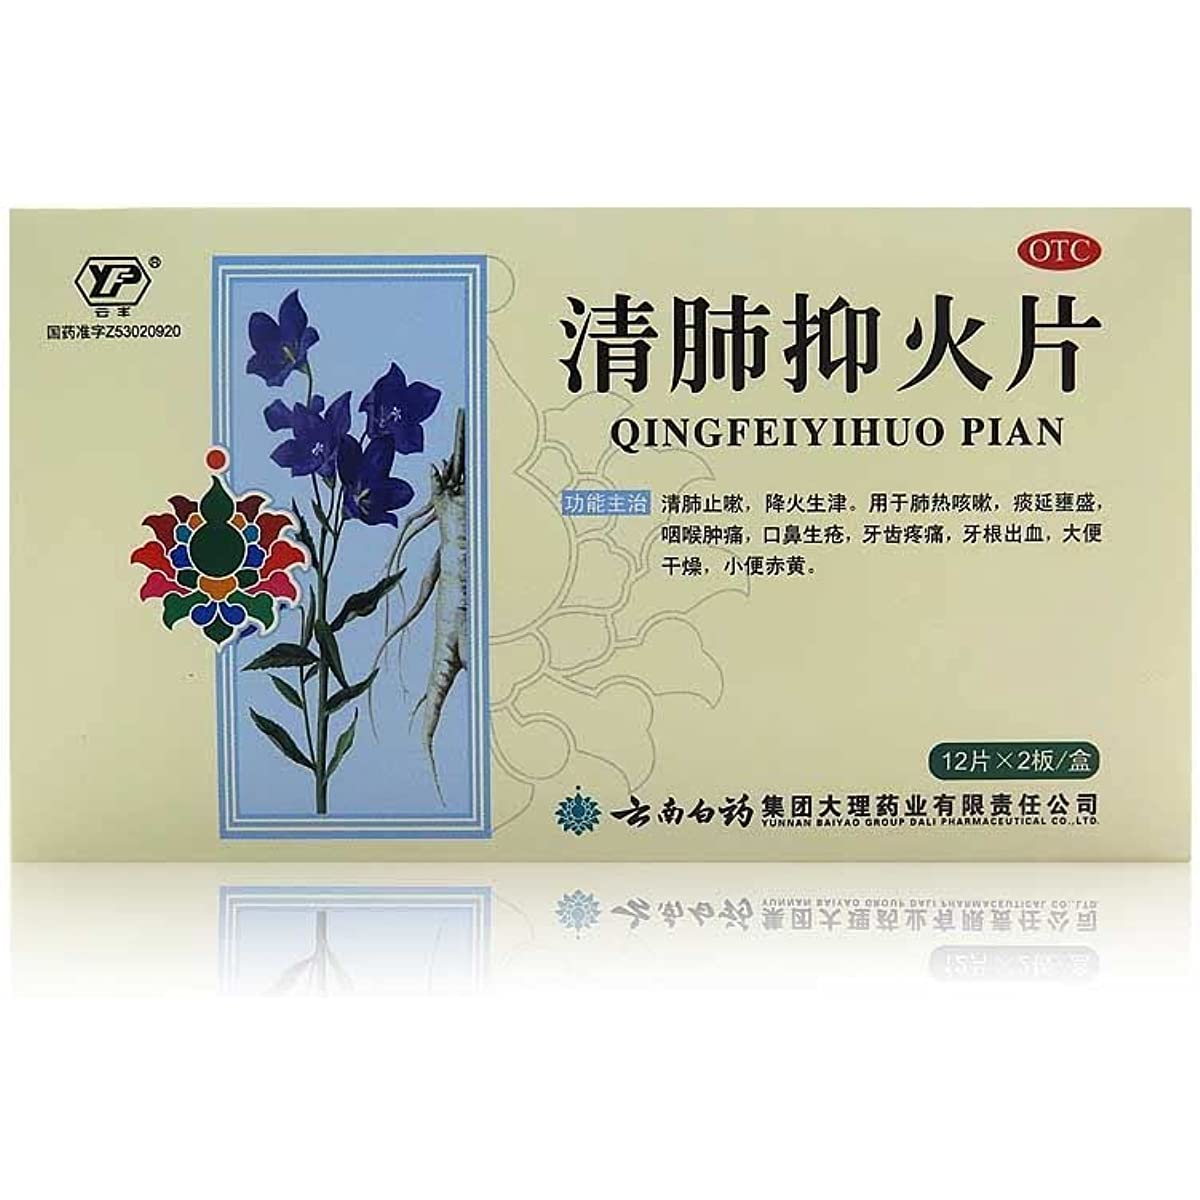 2 Boxes, YNBY Qingfei Yihuo Pian  0.6g*24 Tablets / Box 云南白药 清肺抑火片